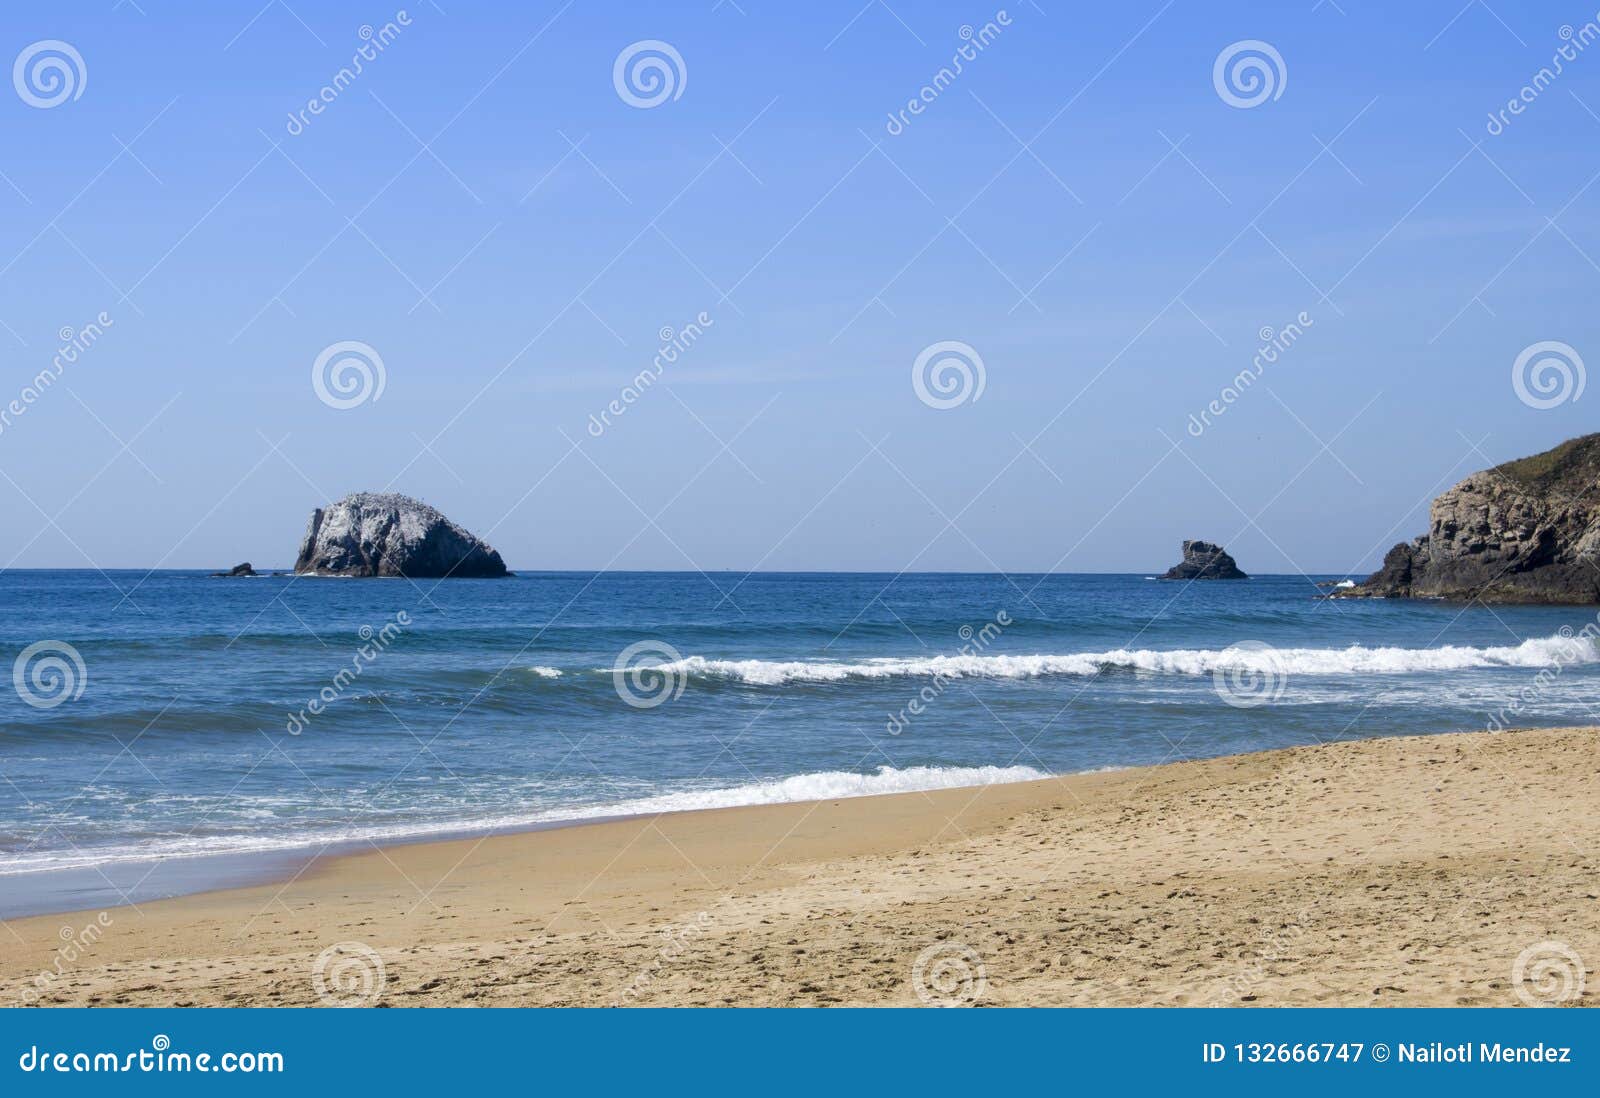 zipolite beach, nudist beach, san pedro pochutla, oaxaca mexico